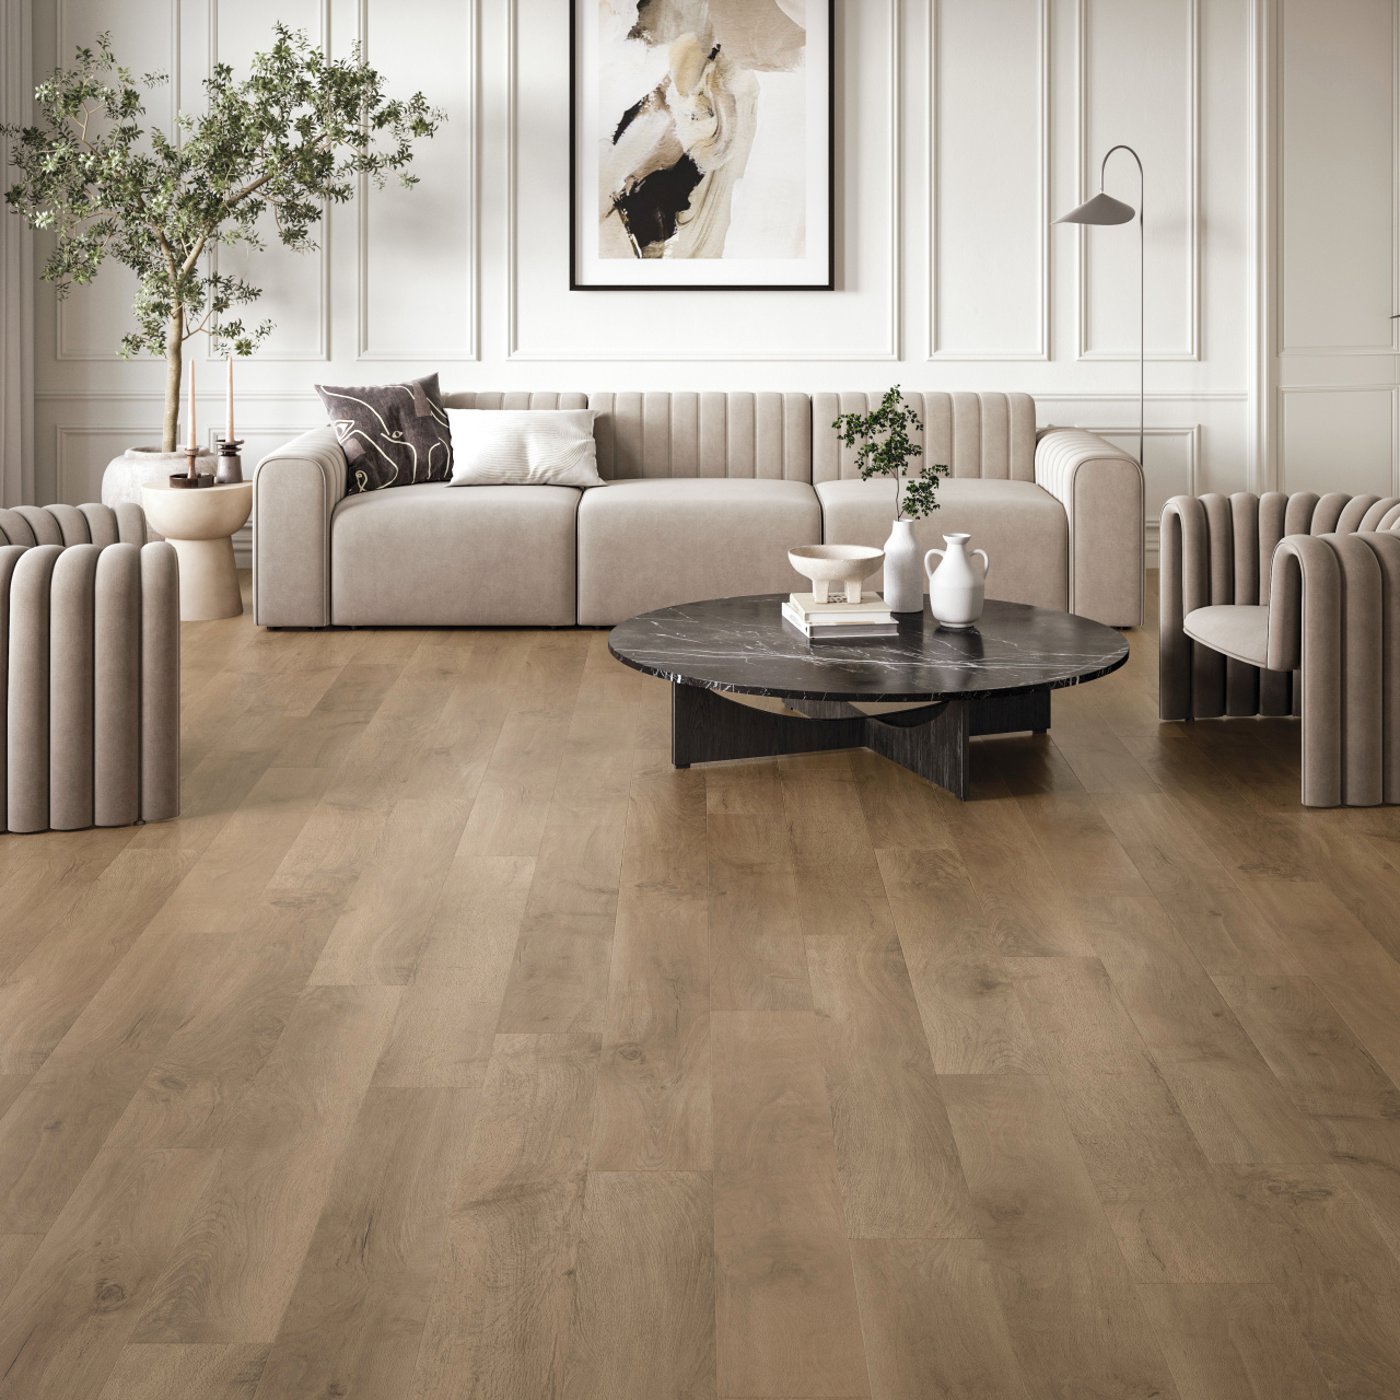 Karndean Designflooring Art Select collection Salon Oak LVT wood flooring in a living room